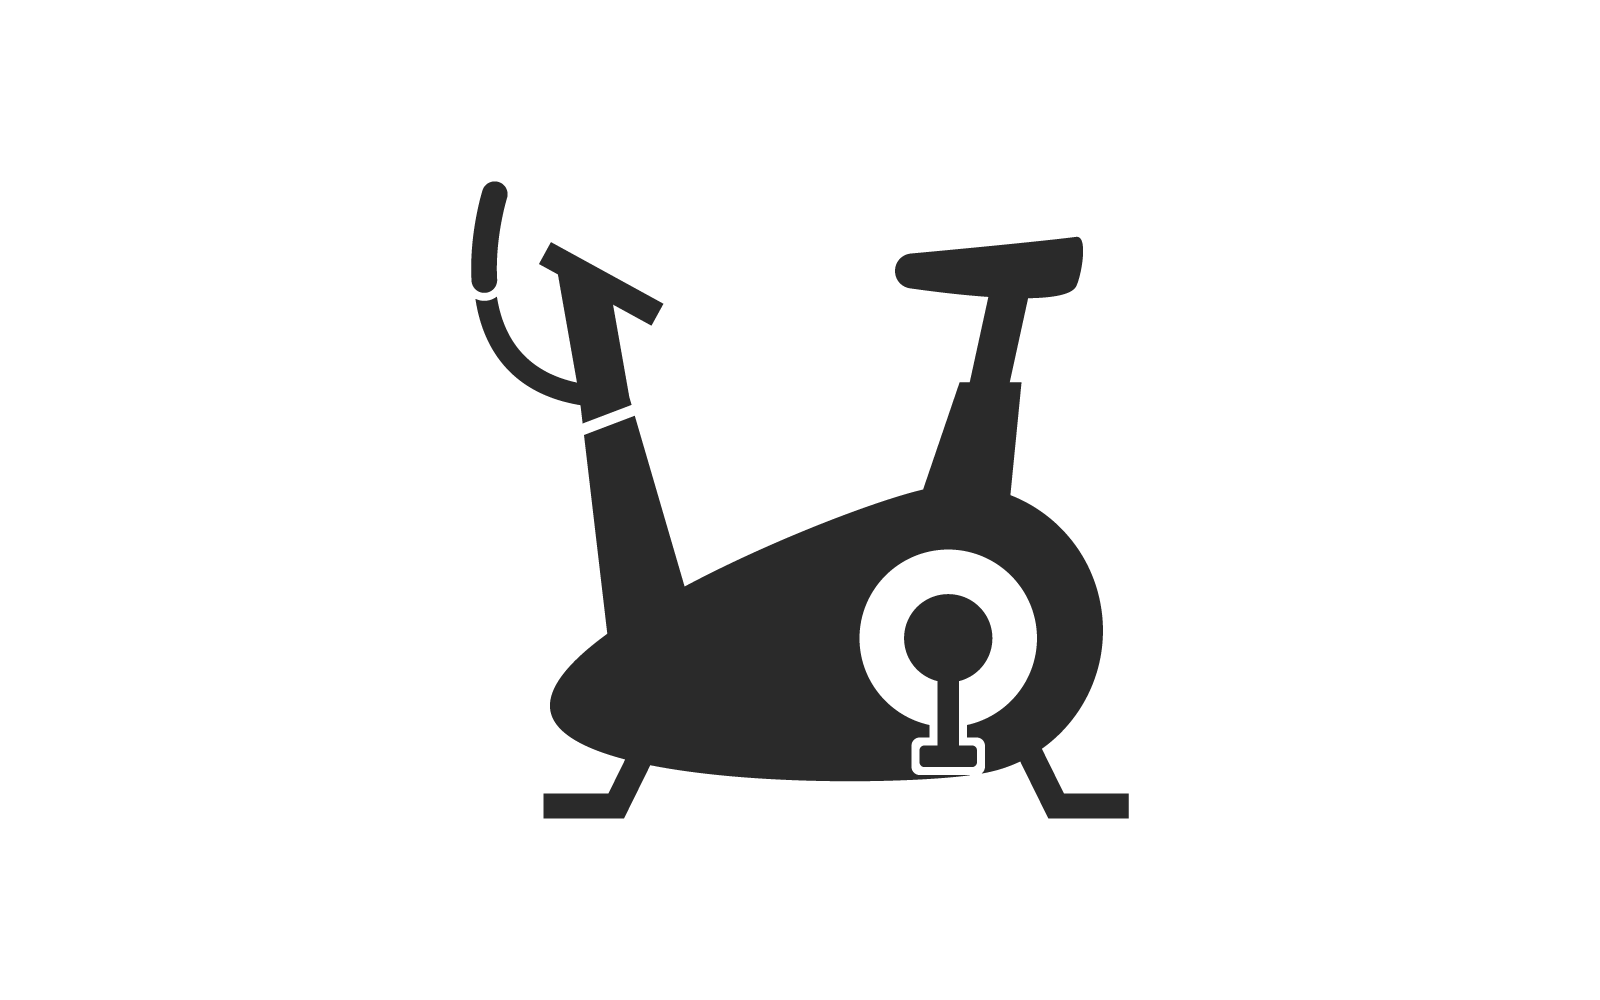 Exercise bicycle fitness icon flat illustration design